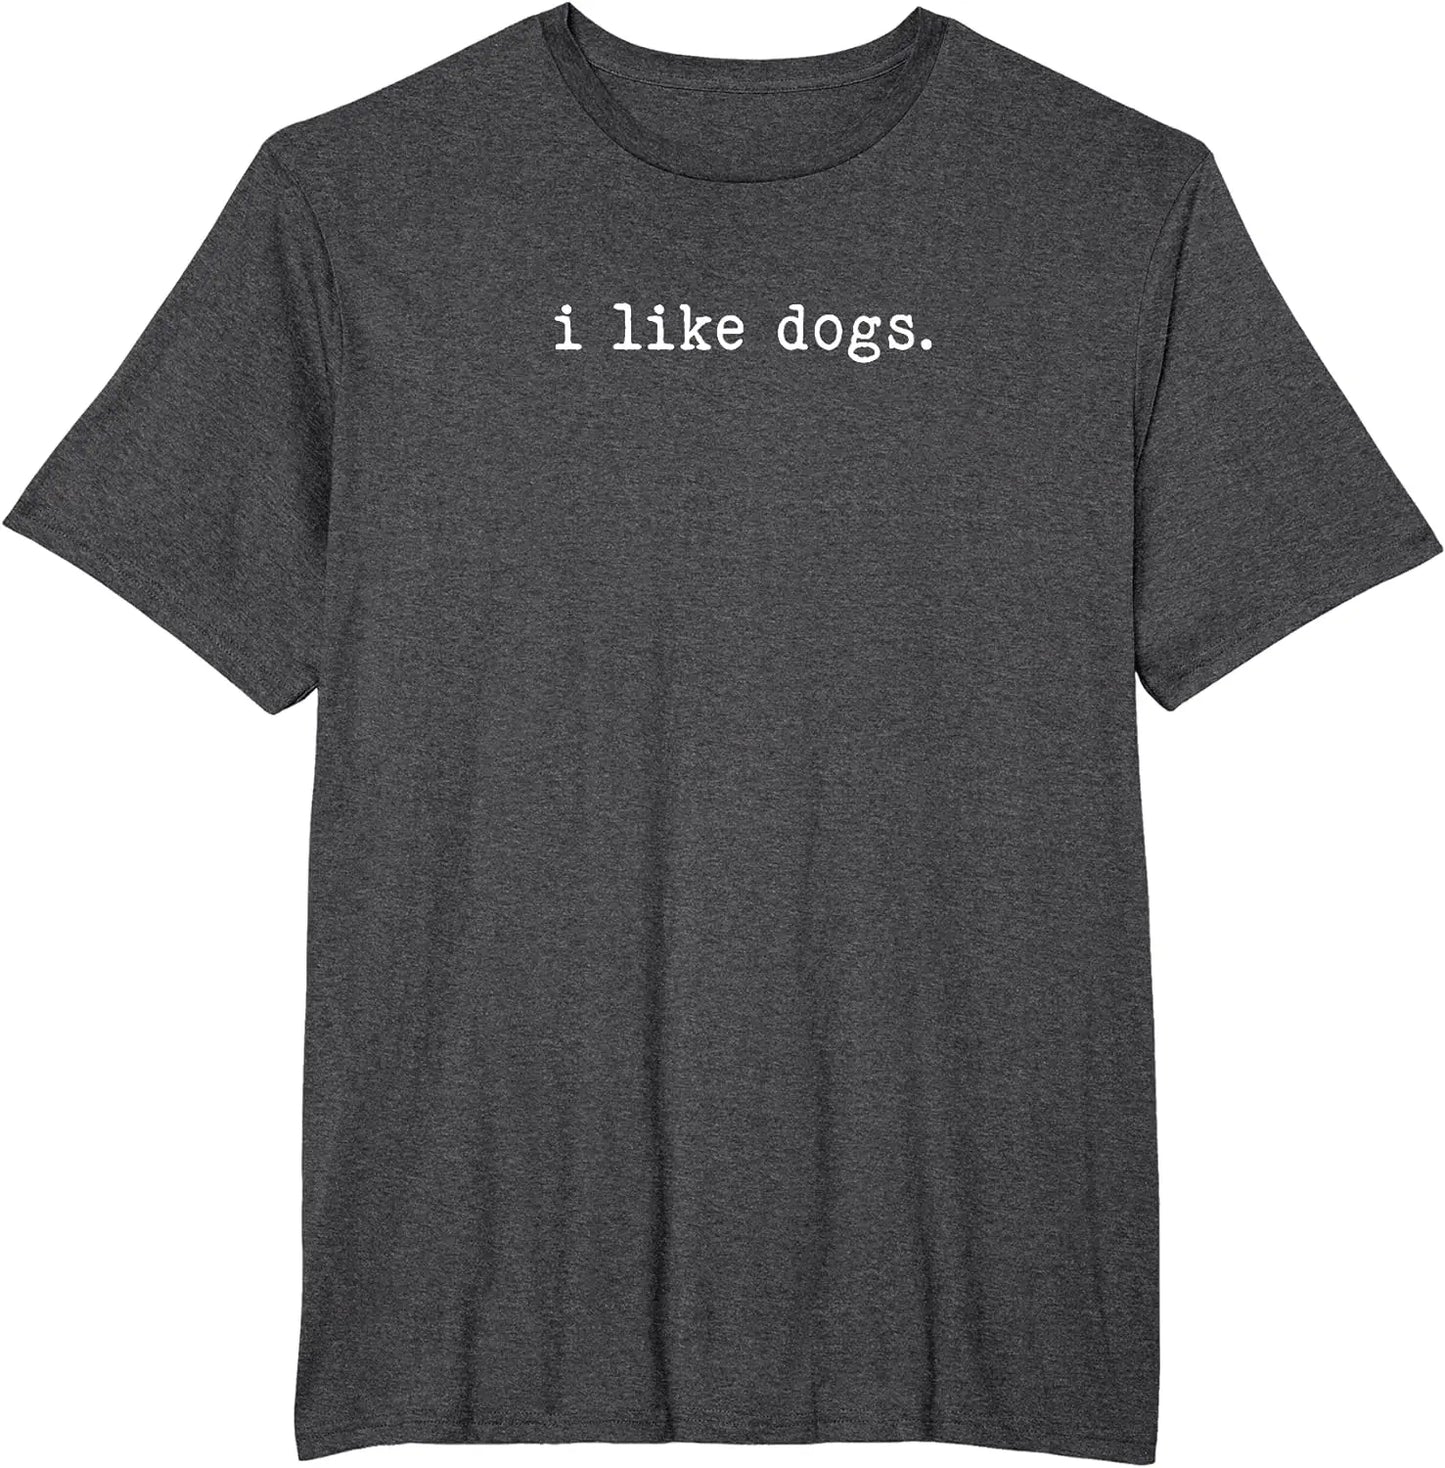 I Like Dogs Simple Minimalist Design Funny Graphic T-Shirt - Lizard Vigilante